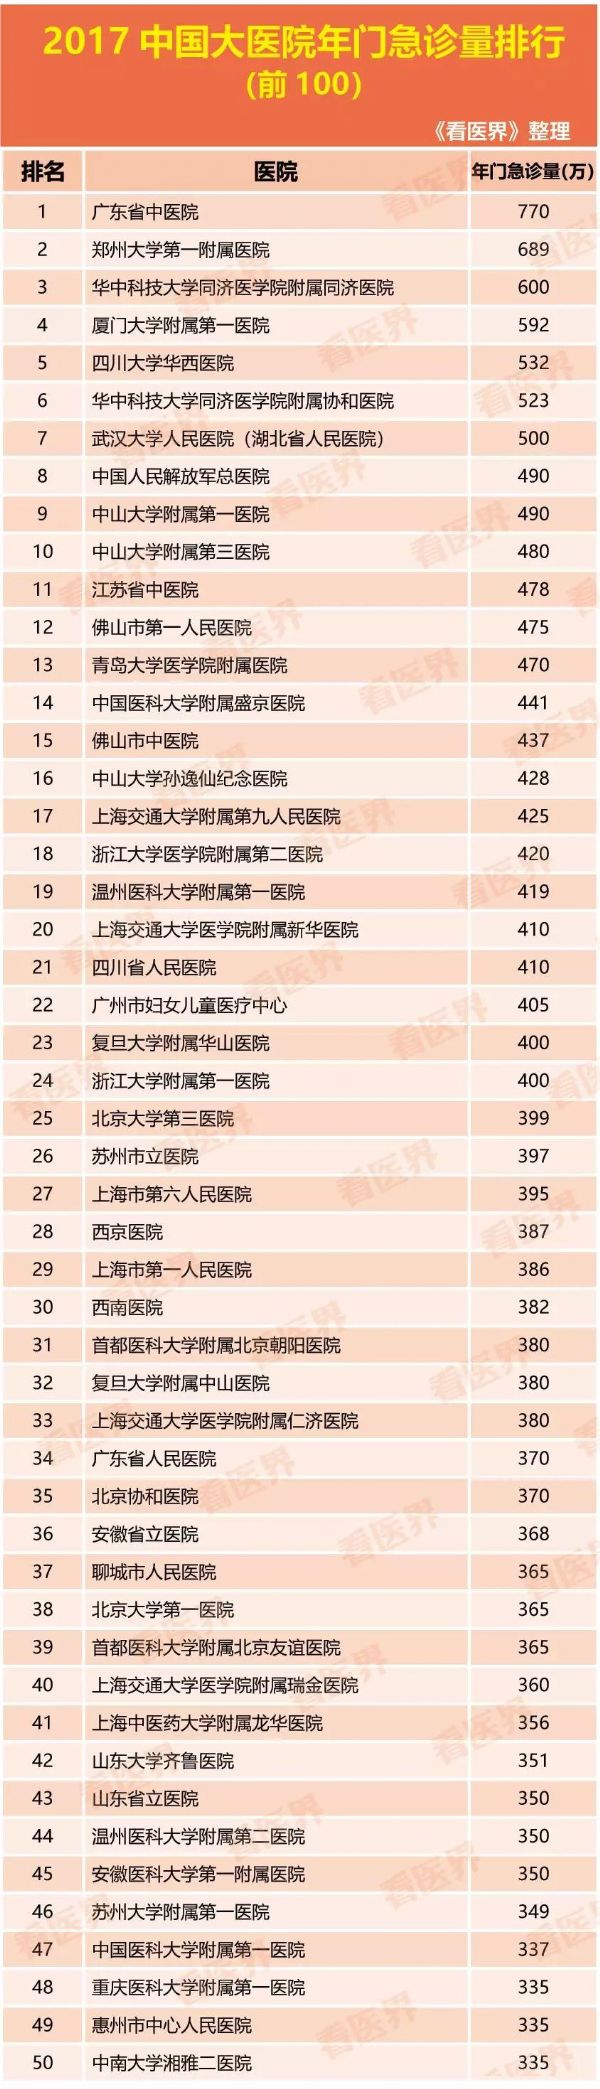 <font color="red">最新</font>！中国门诊量最大的100家医院